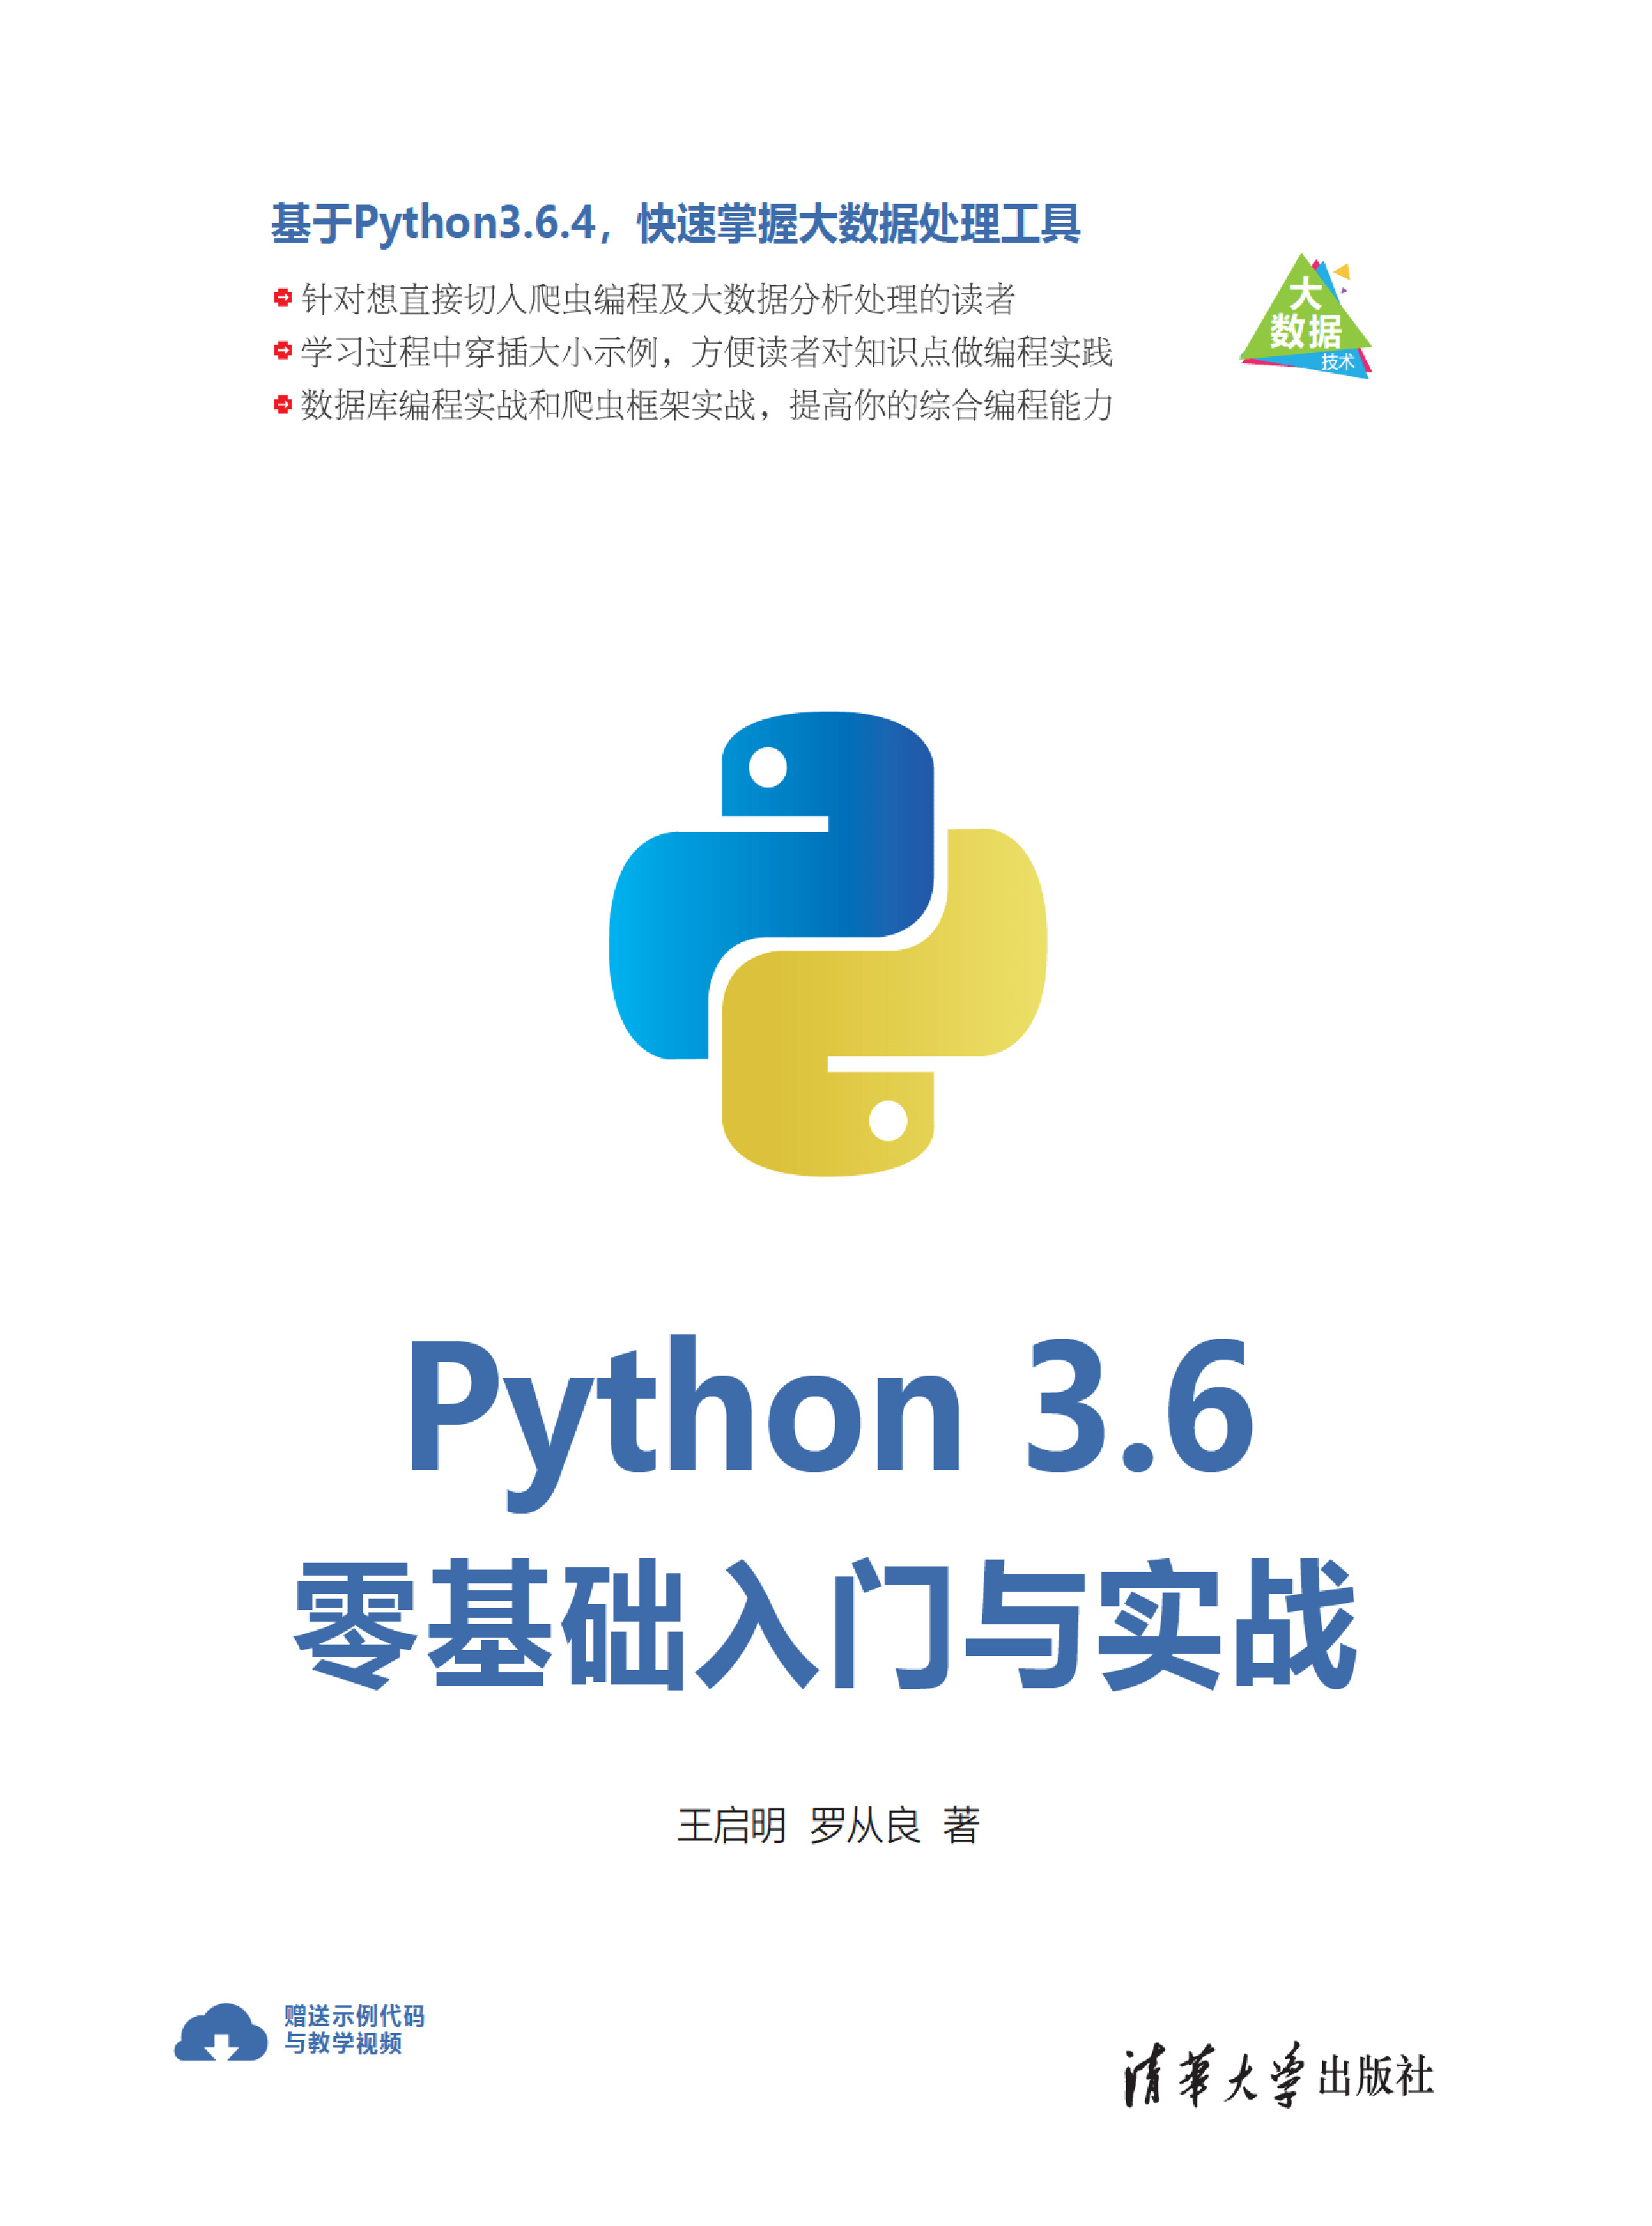 Python 3.6零基础入门与实战